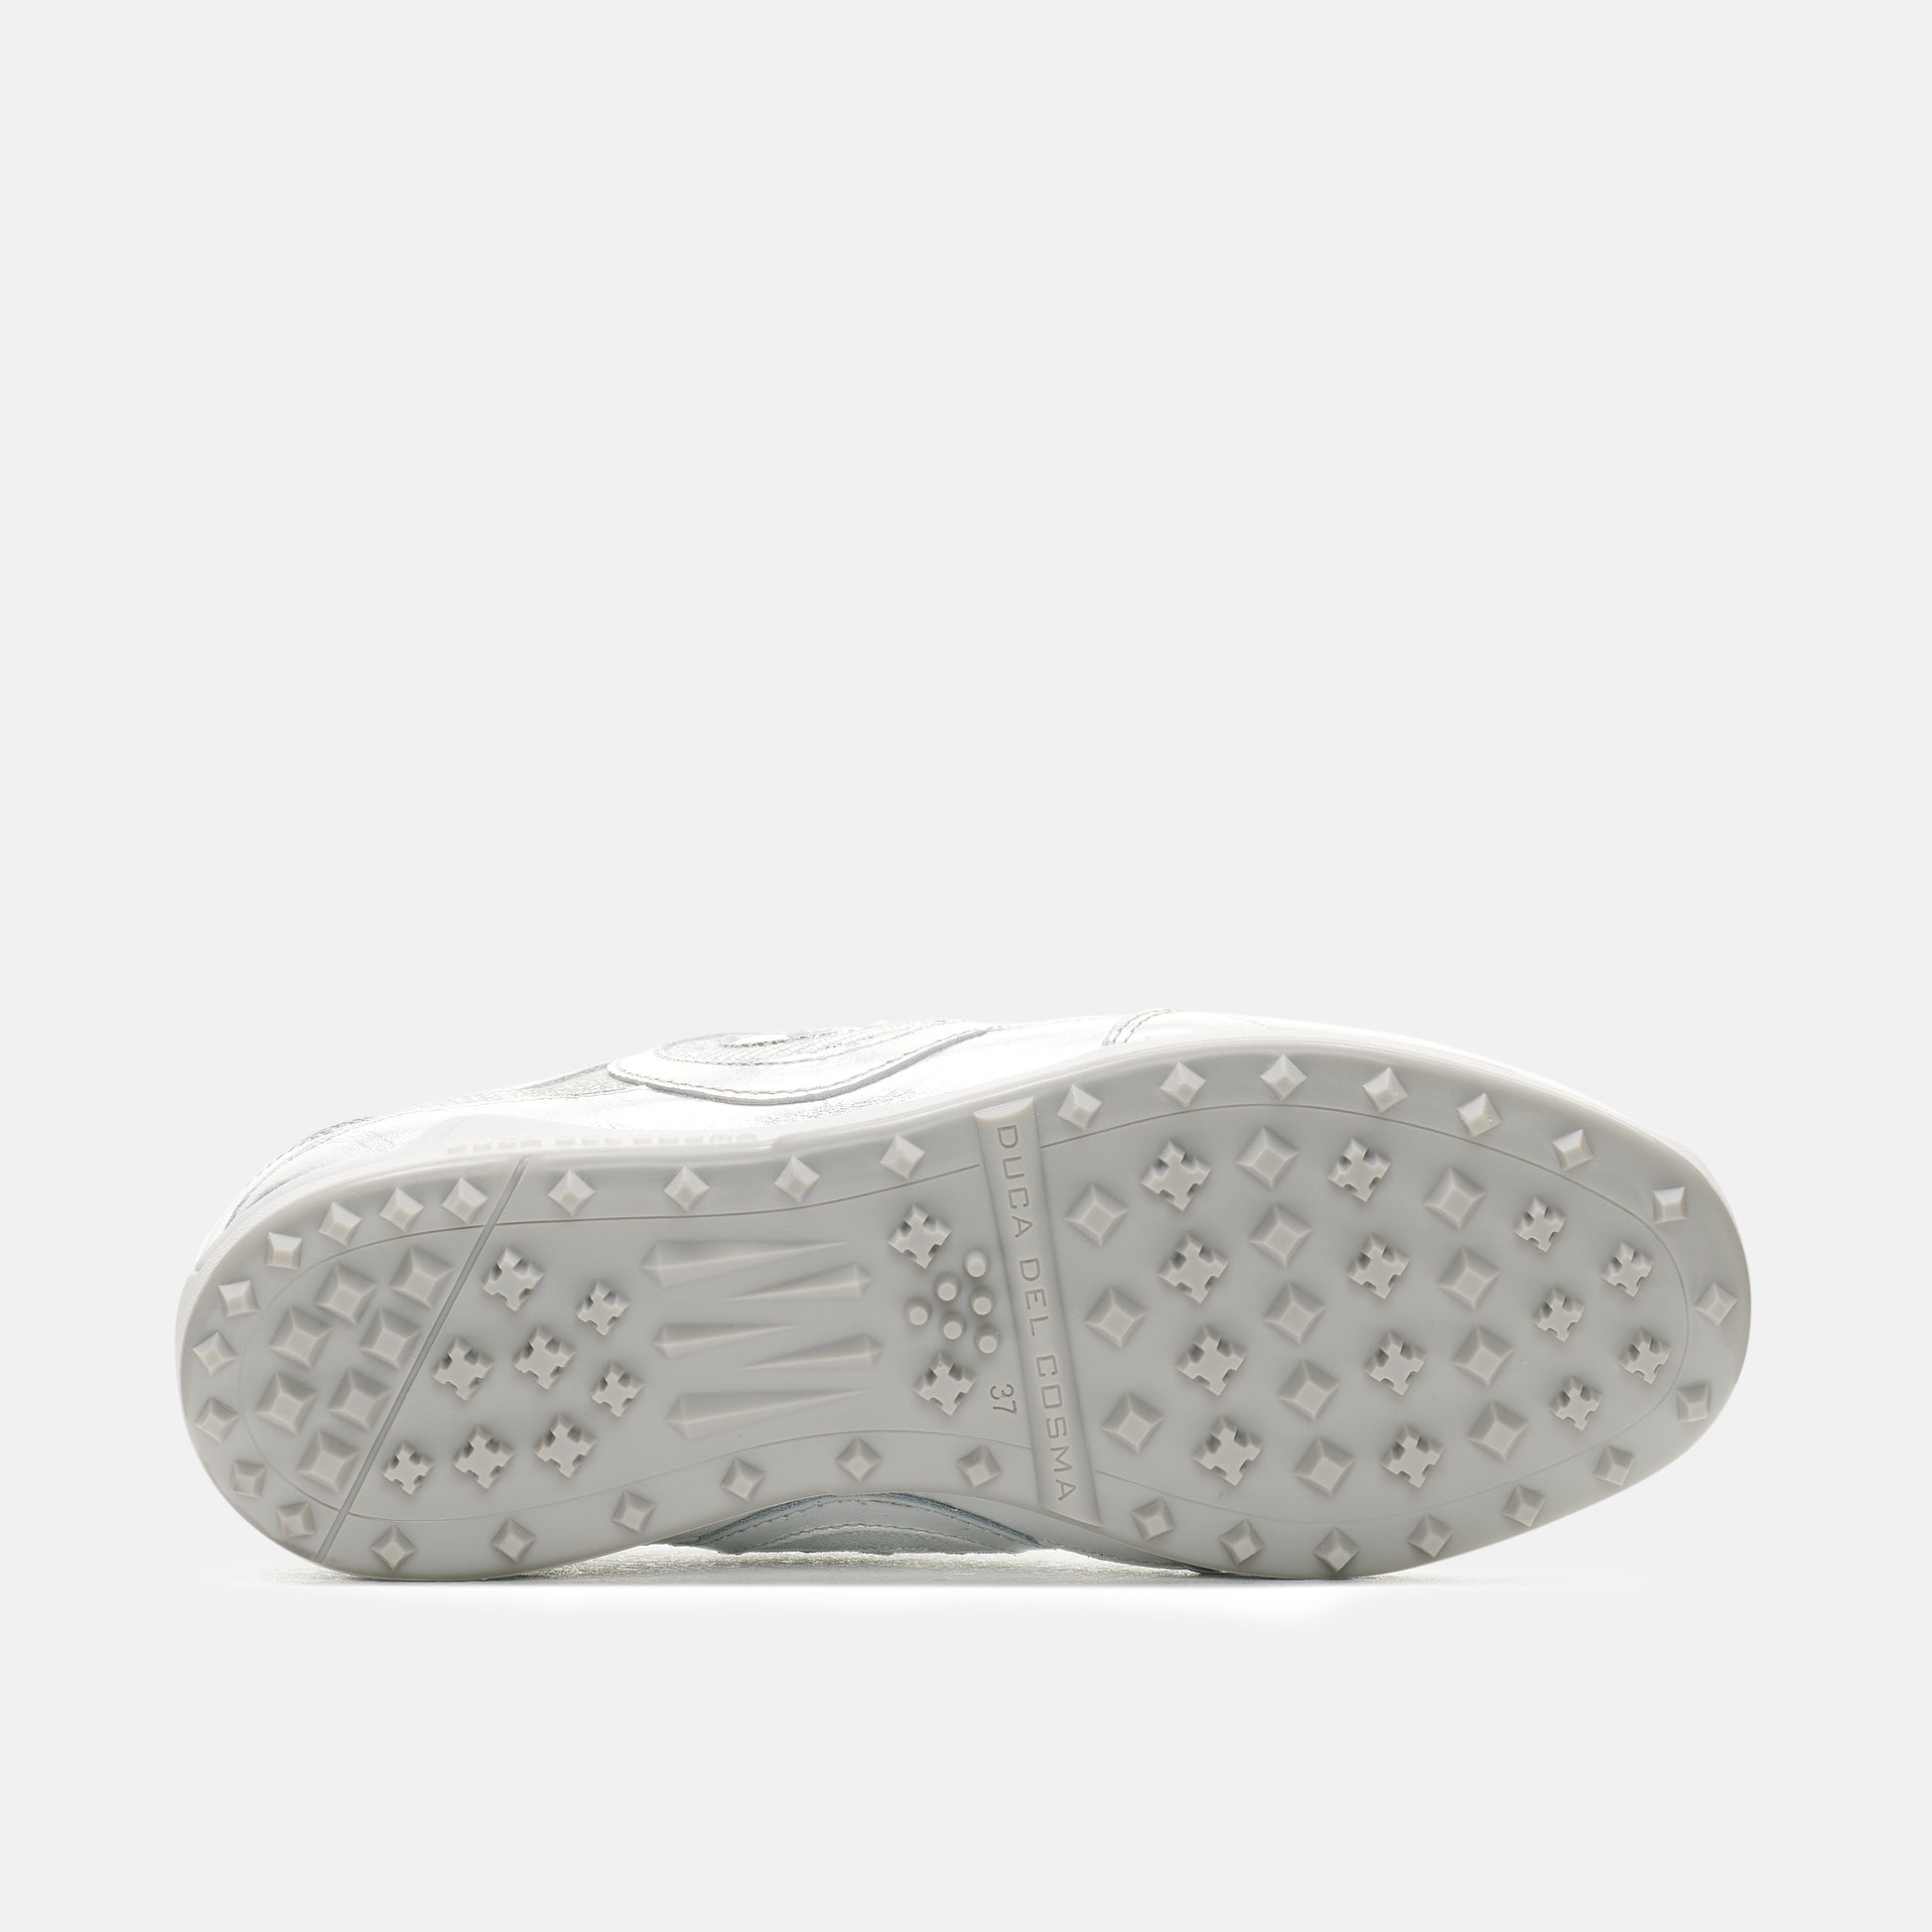 Kubananeo waterproof silver women's golf shoe is waterproof and comfortable